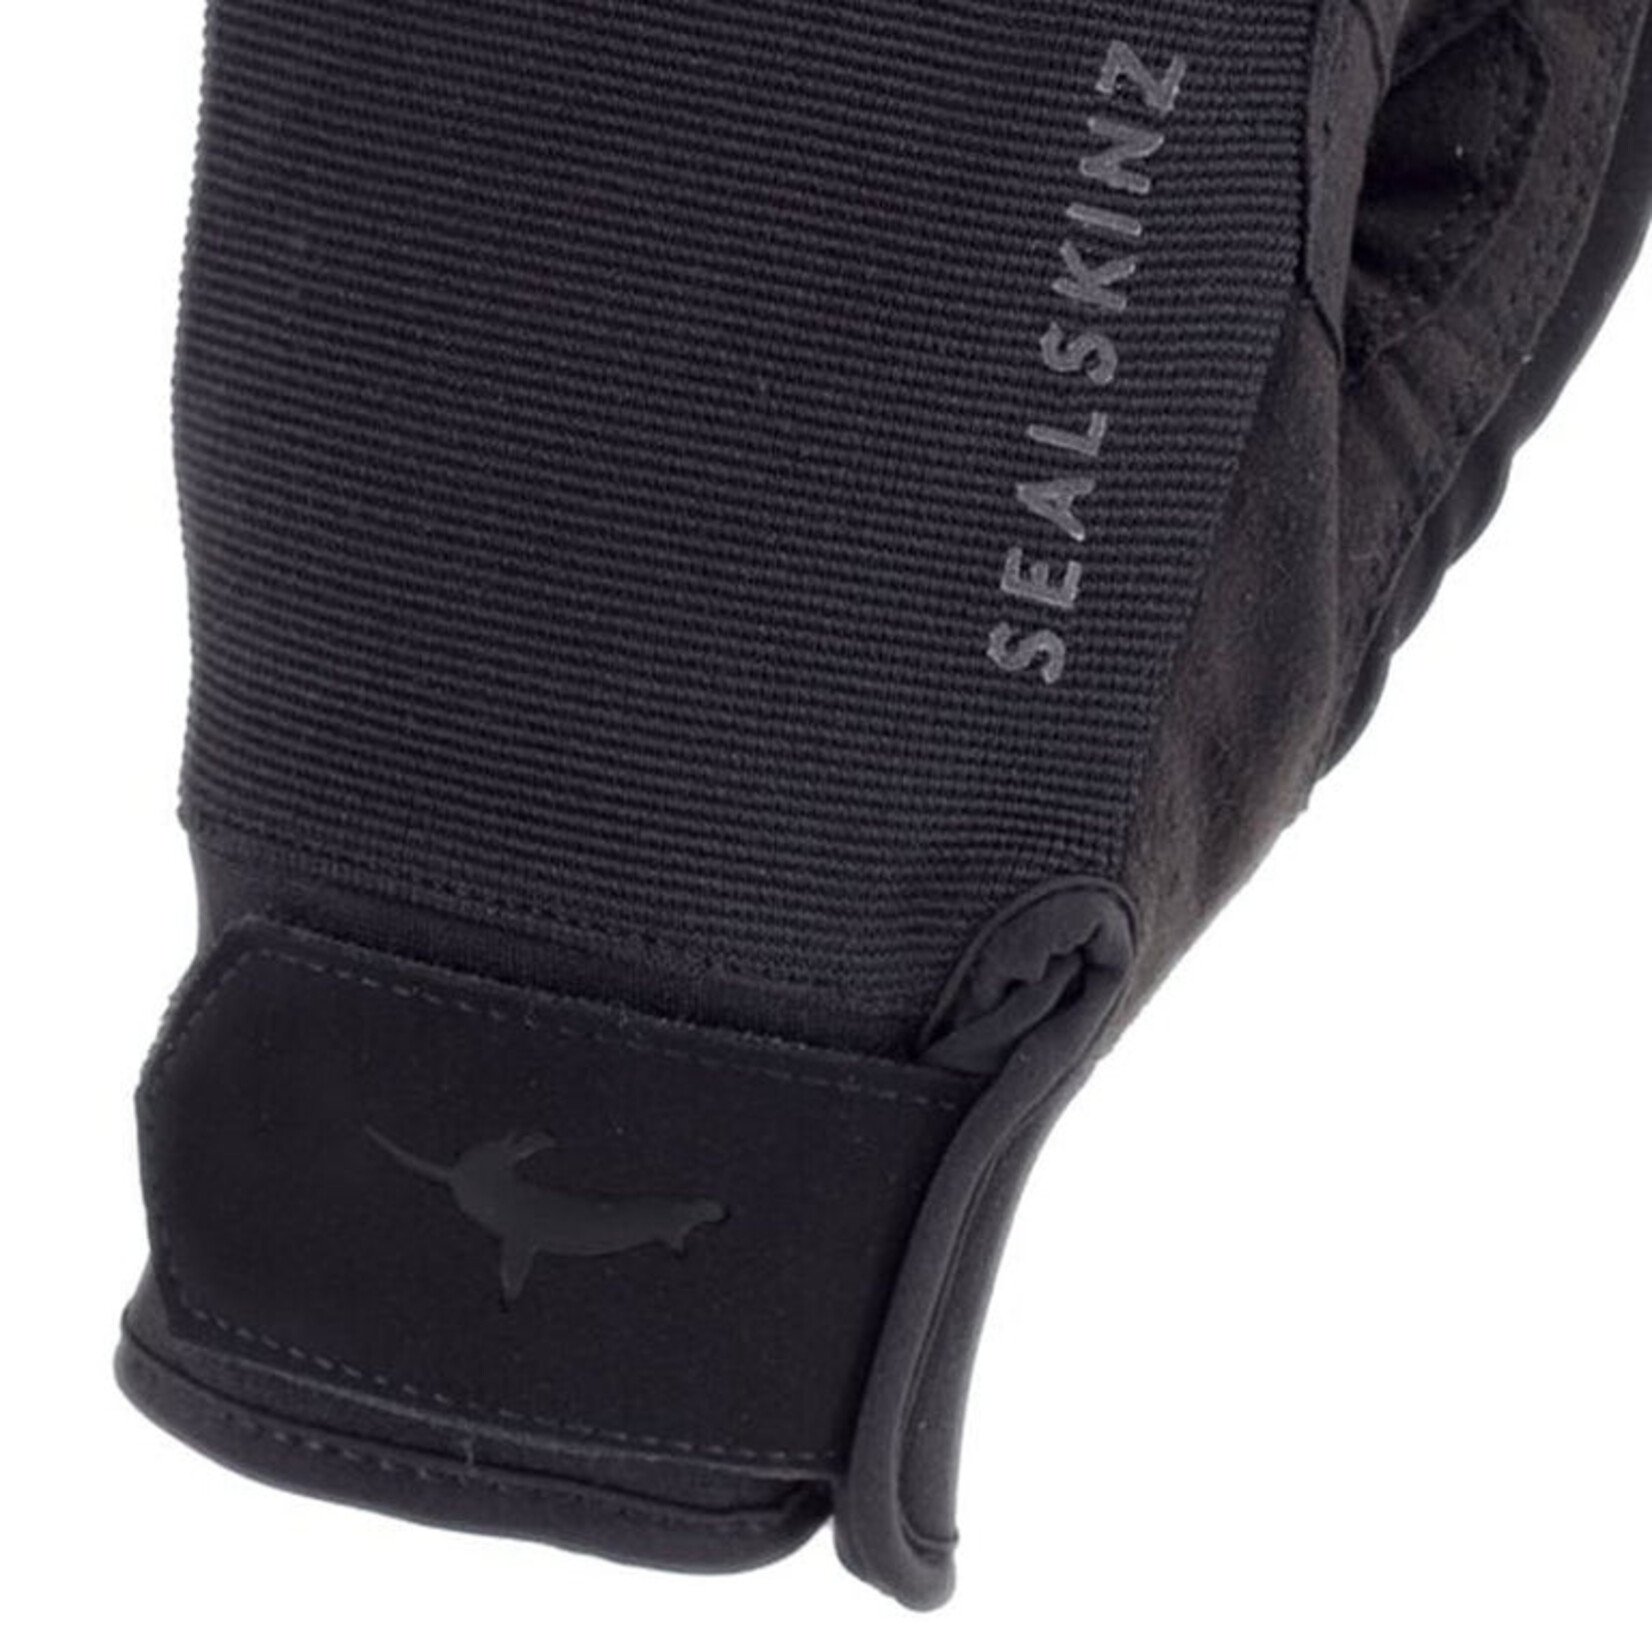 SealSkinz SealSkinz HARLING Waterproof All Weather Glove